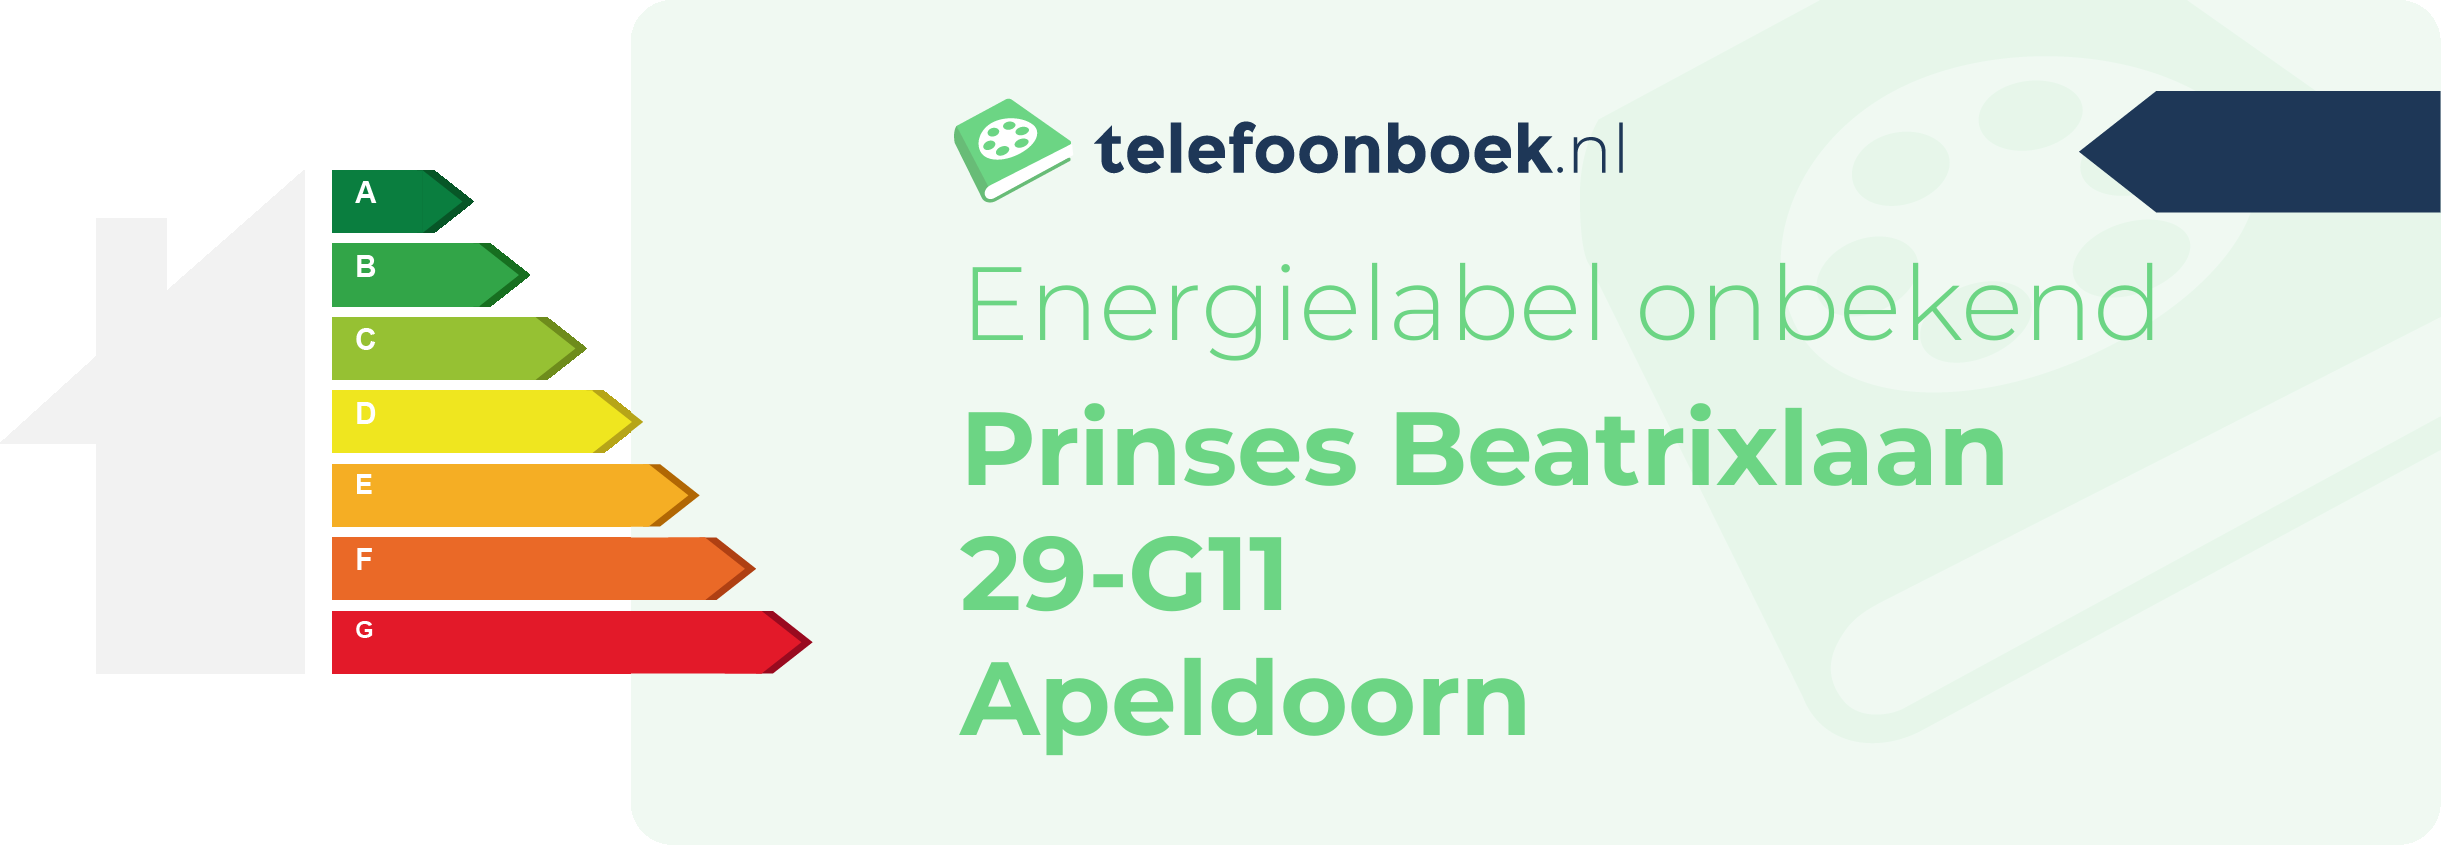 Energielabel Prinses Beatrixlaan 29-G11 Apeldoorn